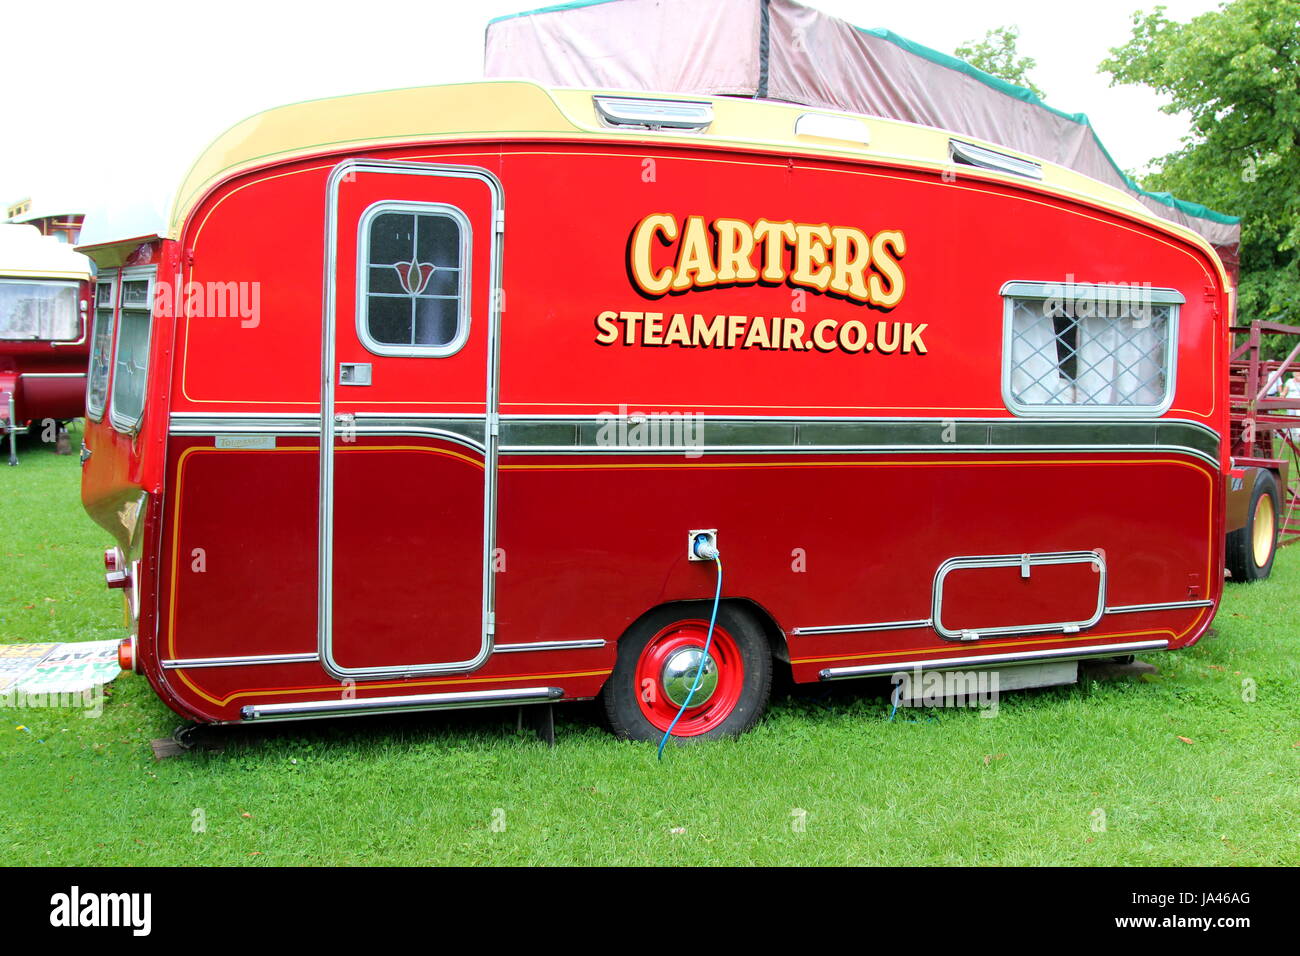 Carters Steam Fair Caravan Stockfoto